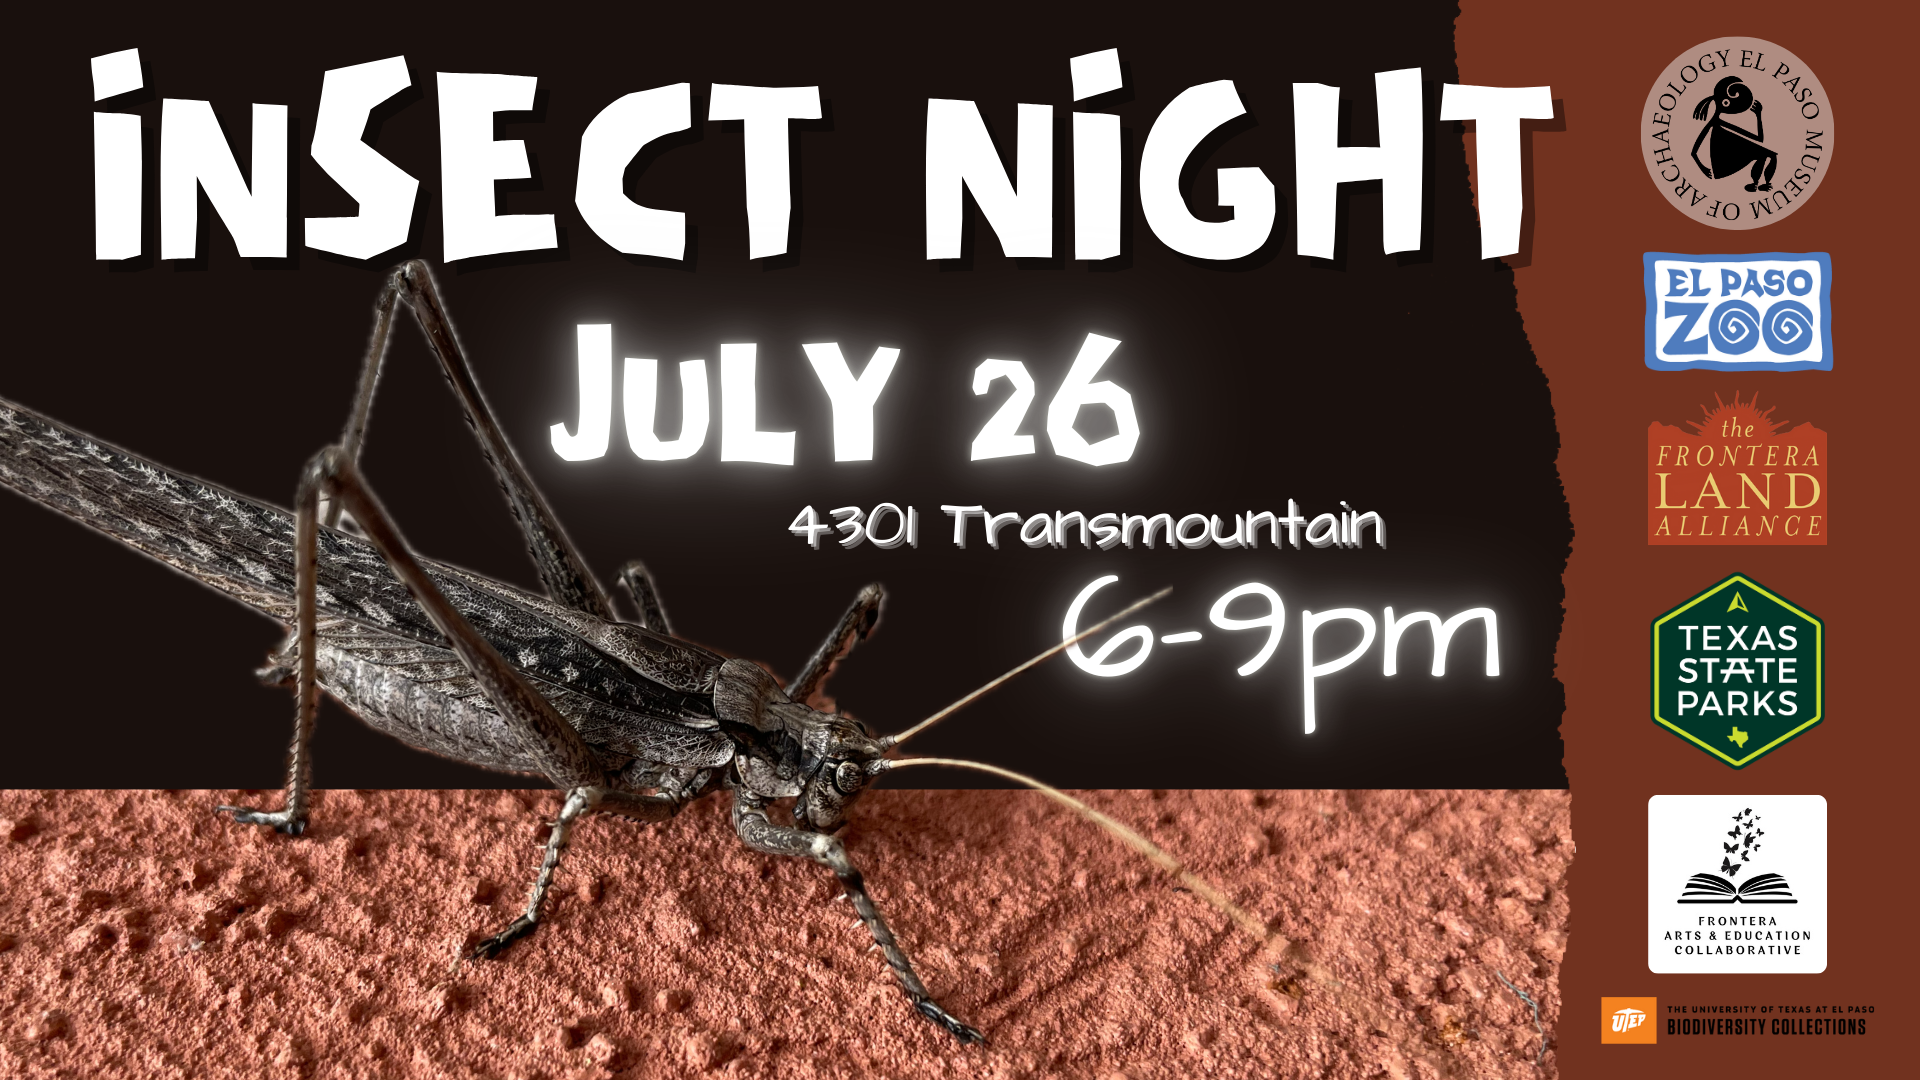 Digital Insect Night Grasshopper v2